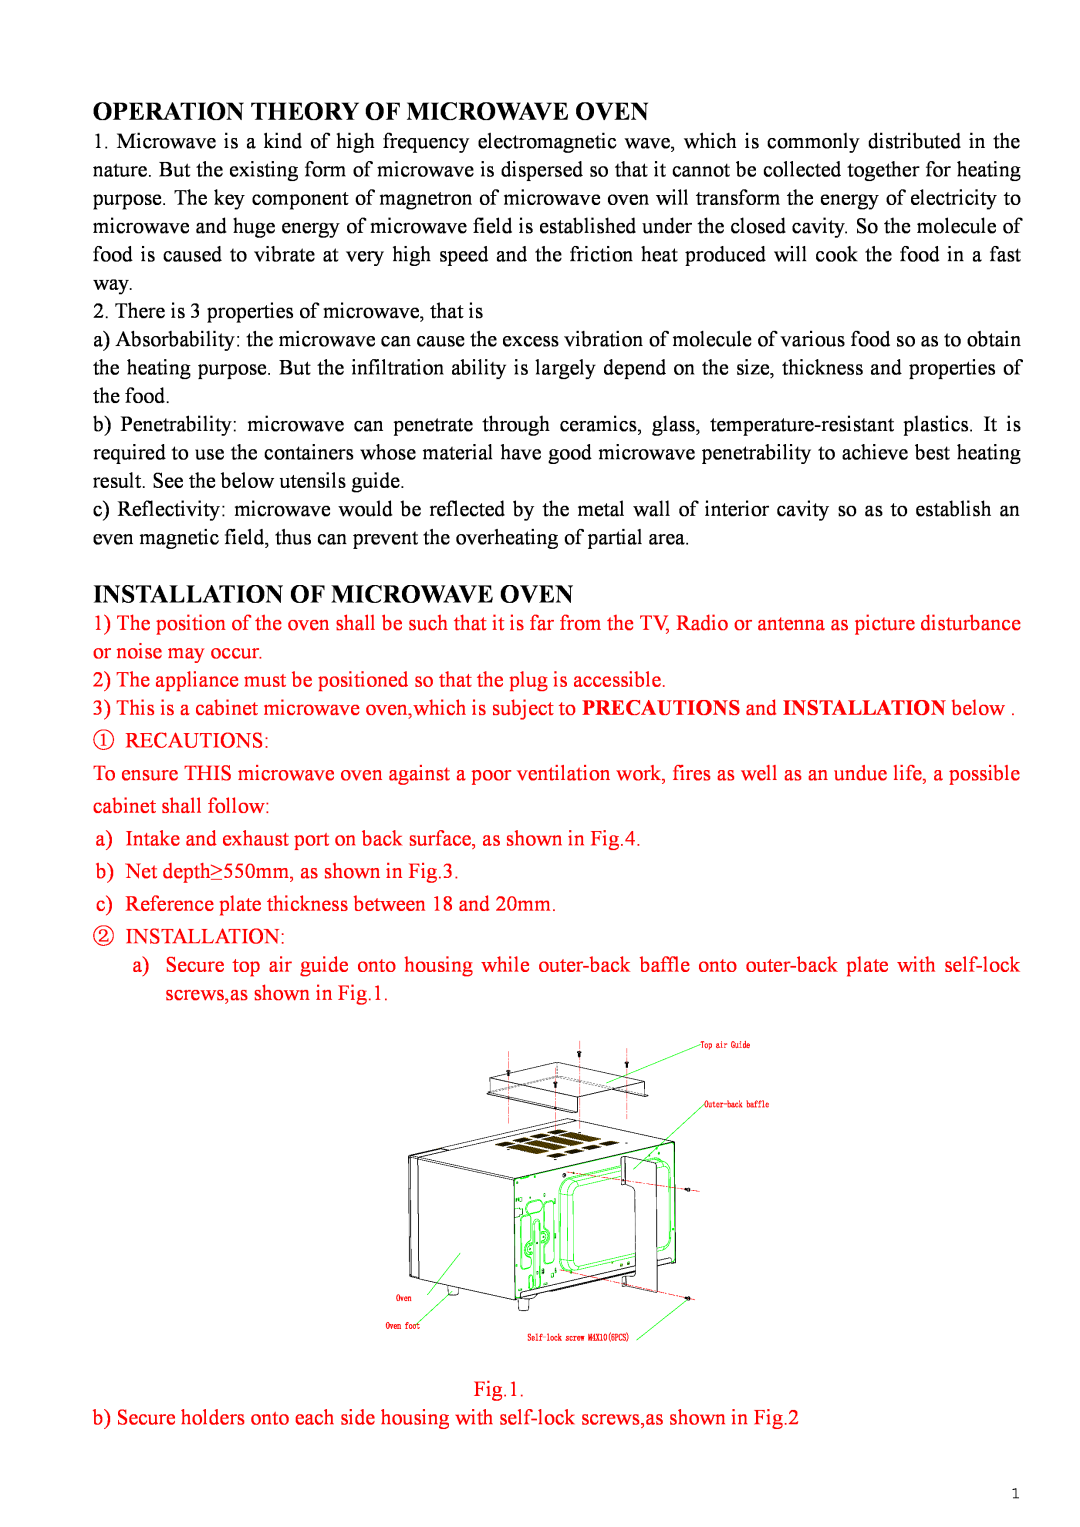 Haier HDE-2580EGB manual Operation Theory Of Microwave Oven, Installation Of Microwave Oven, ① RECAUTIONS 